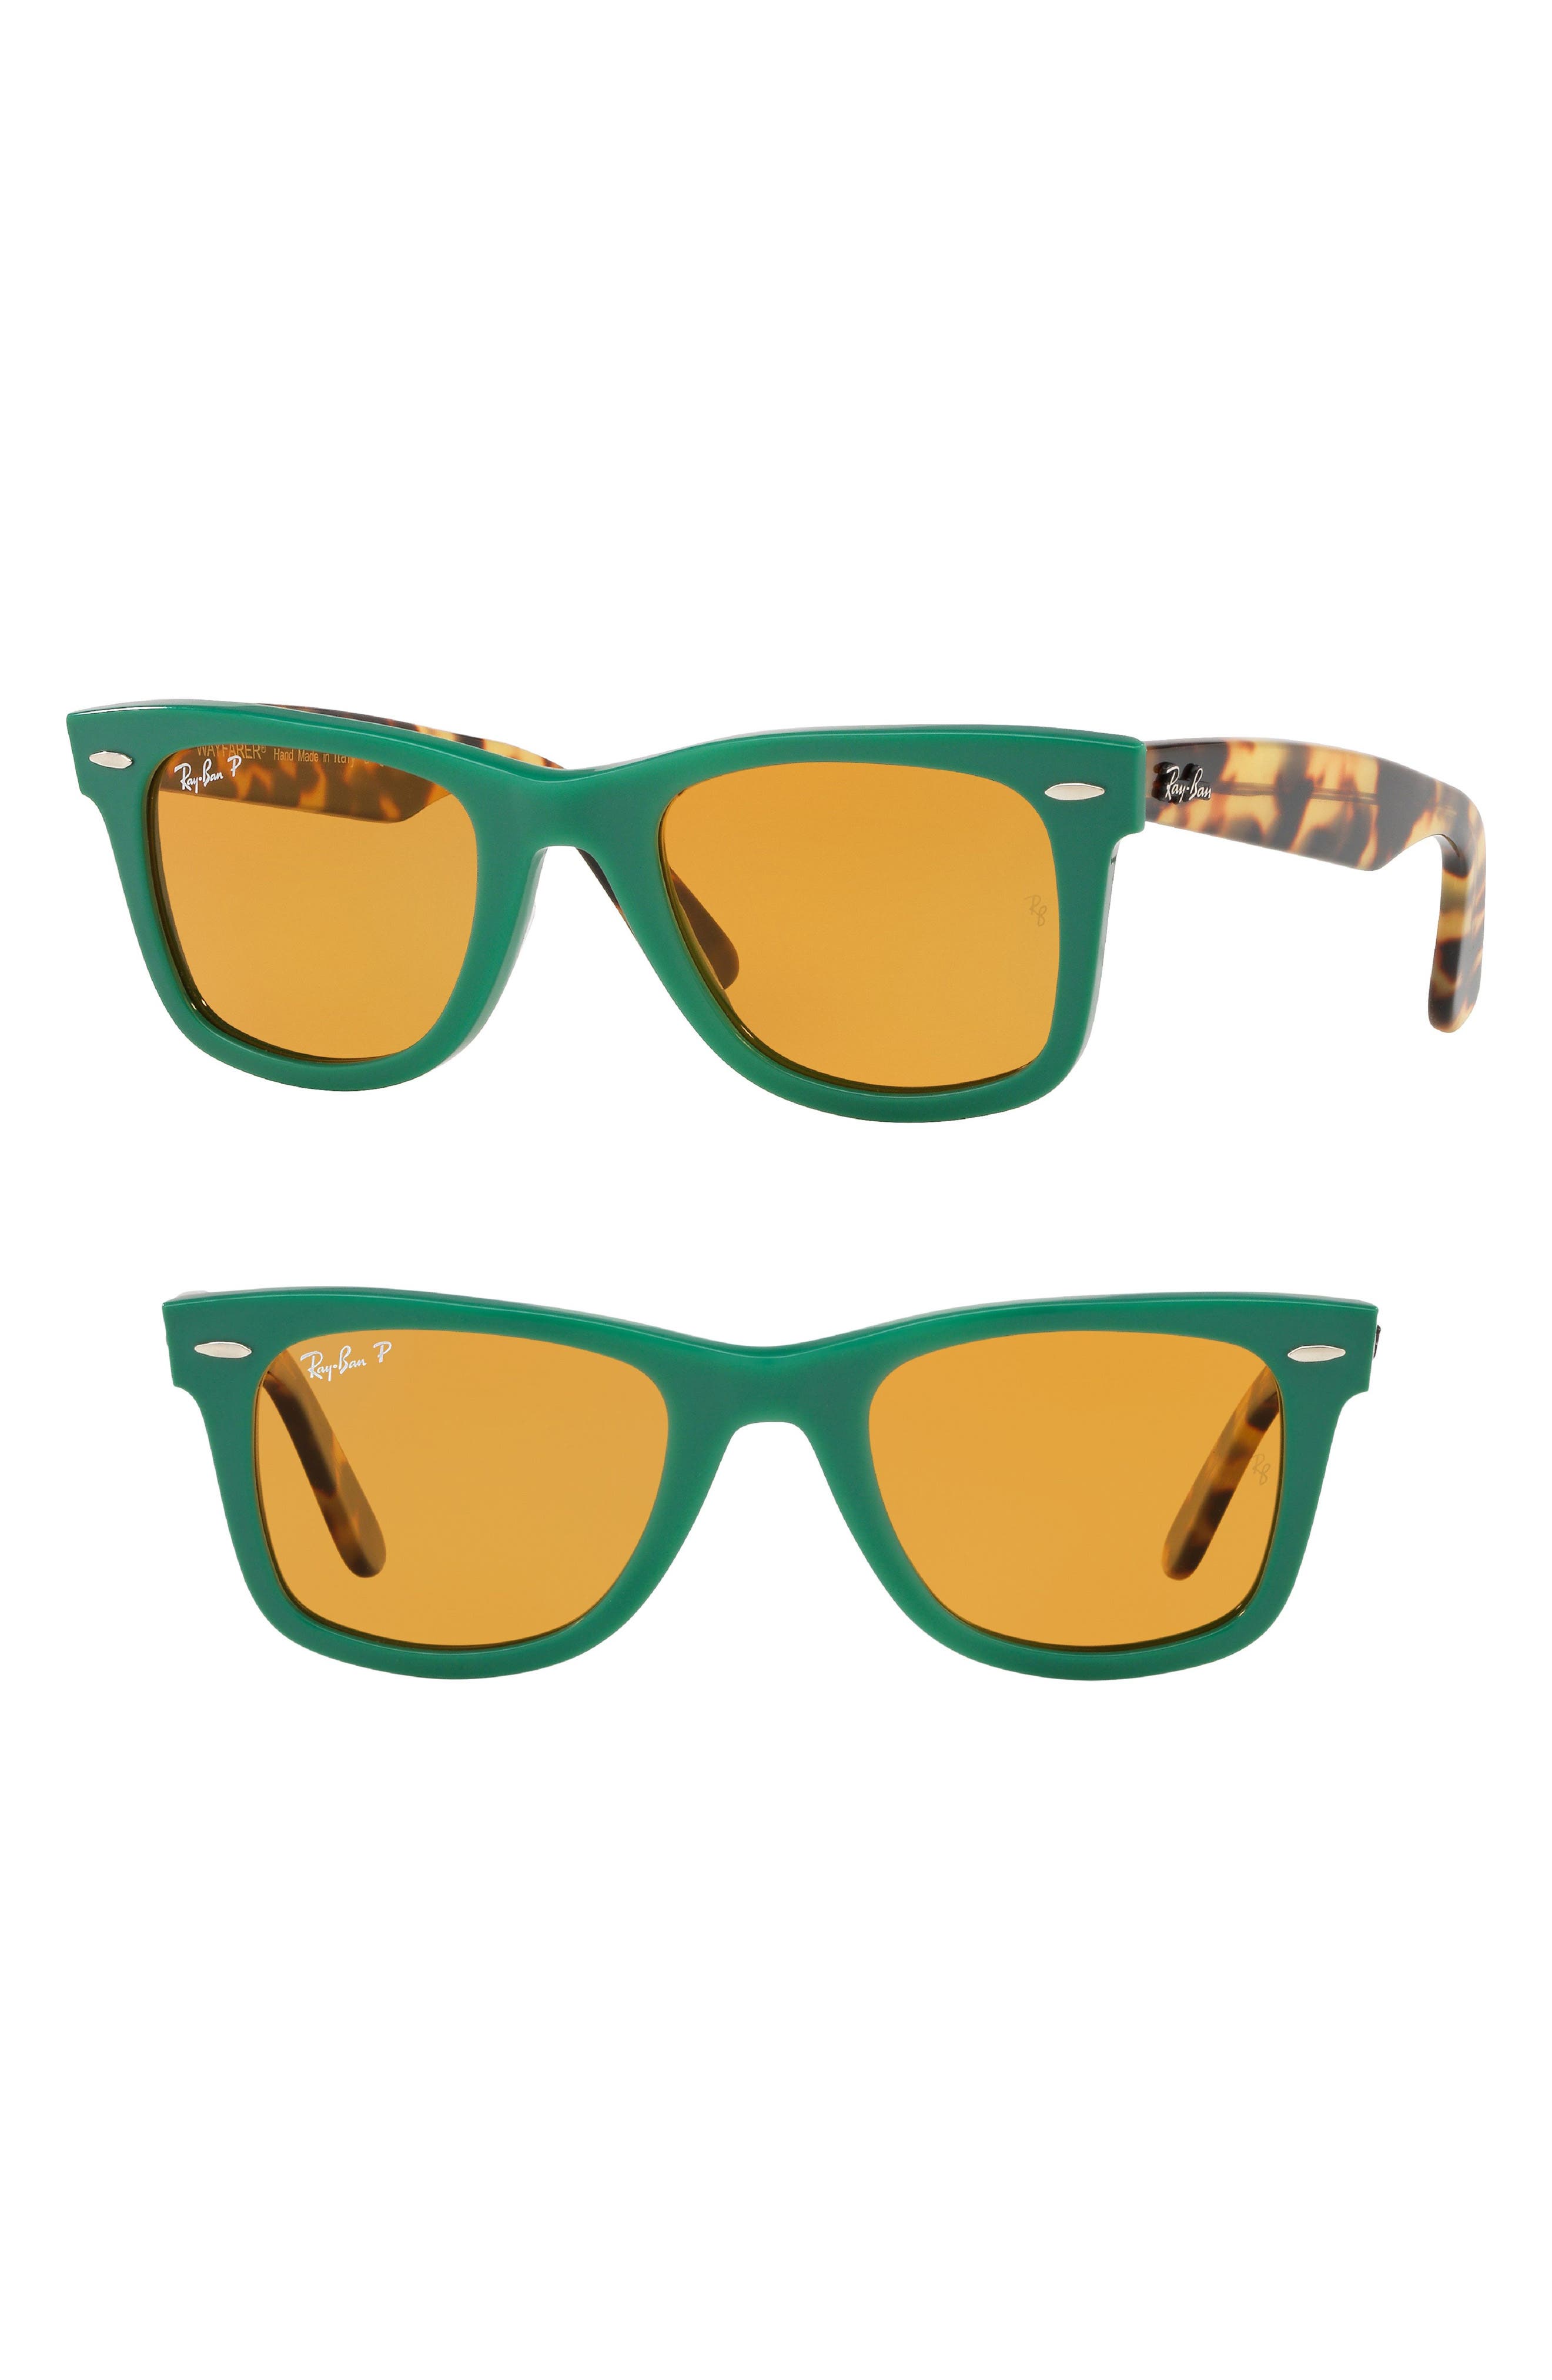 Ray Ban Polarized 50mm Standard Classic Wayfarer Sunglasses Hautelook